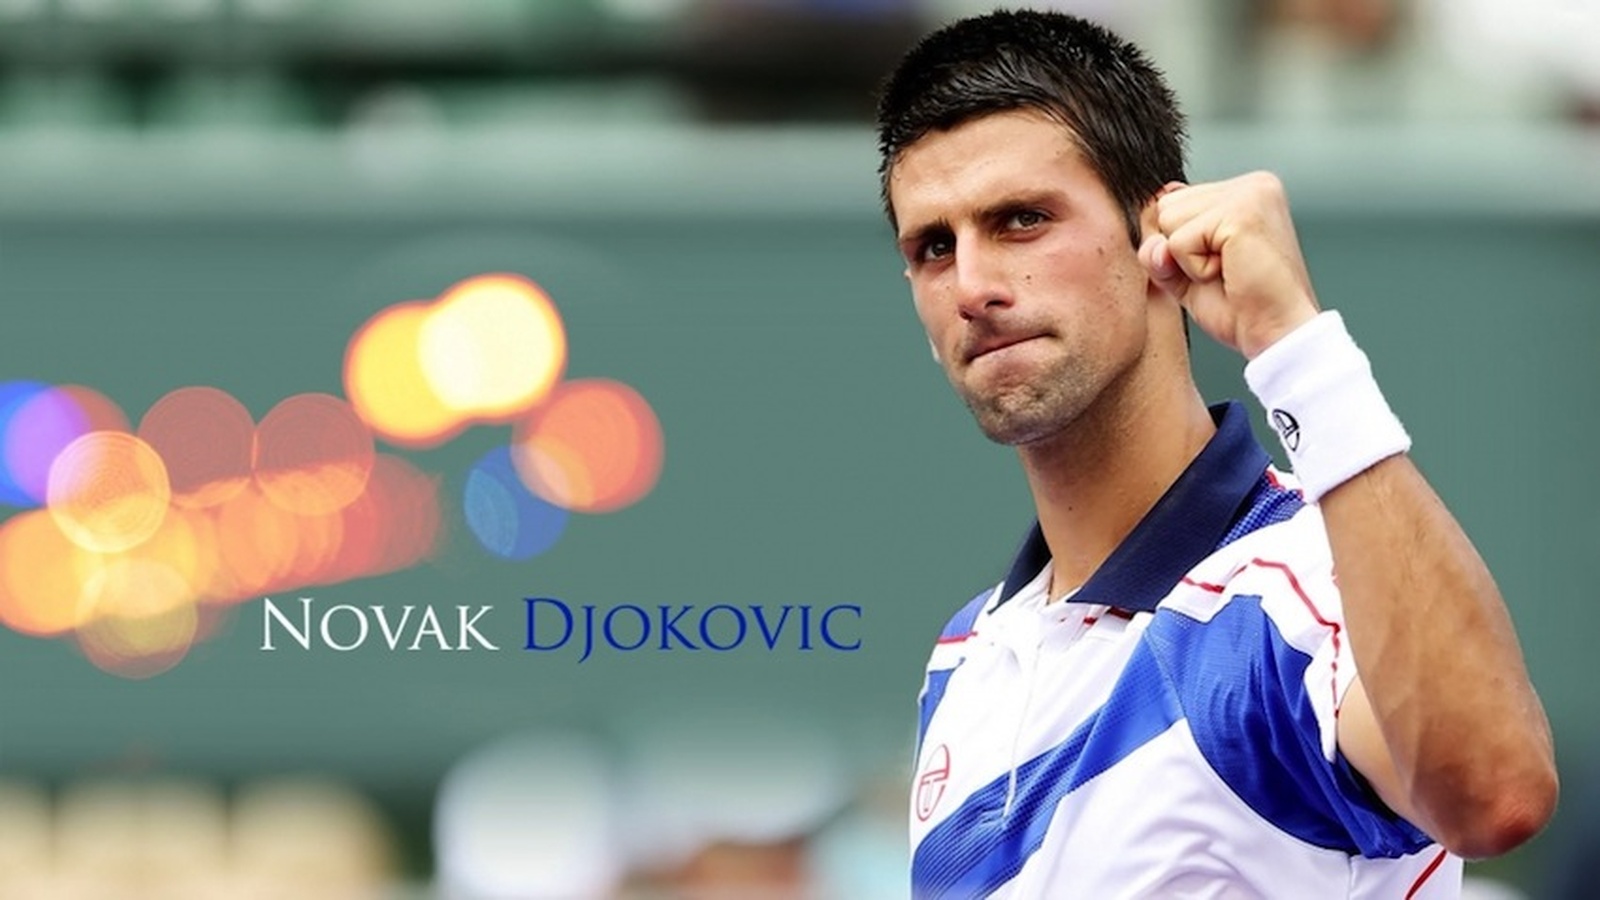 Novak Djokovic's Diet And Health Regime